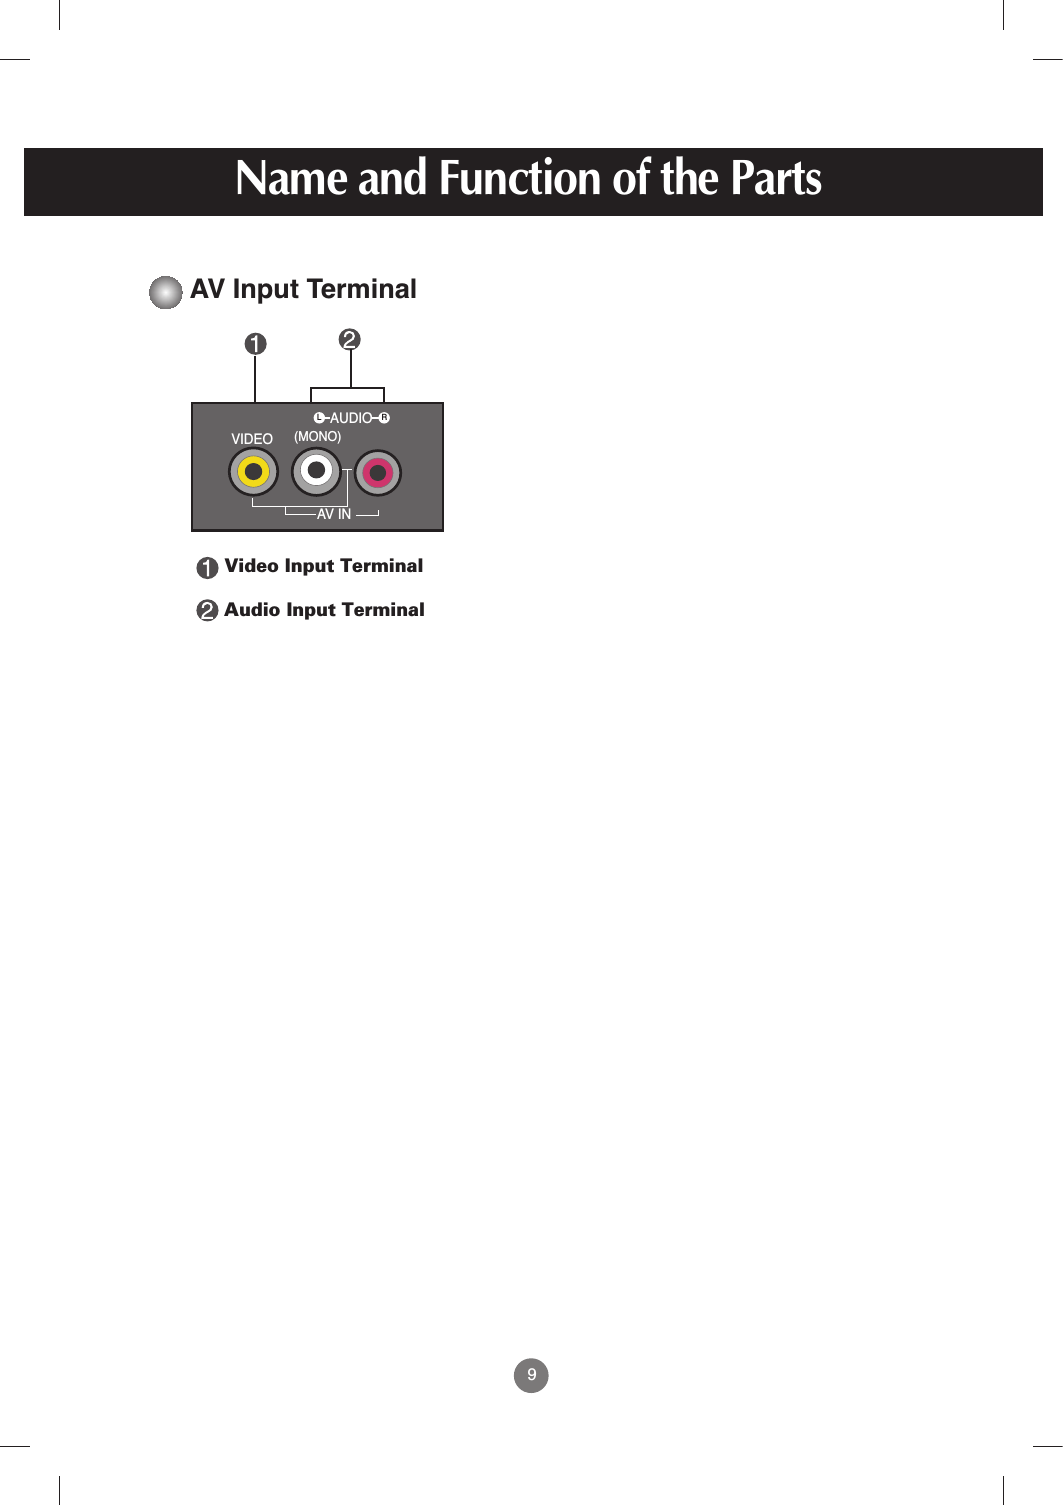 9AV Input TerminalAV IN(MONO)VIDEOAUDIOL RAudio Input TerminalVideo Input TerminalName and Function of the Parts